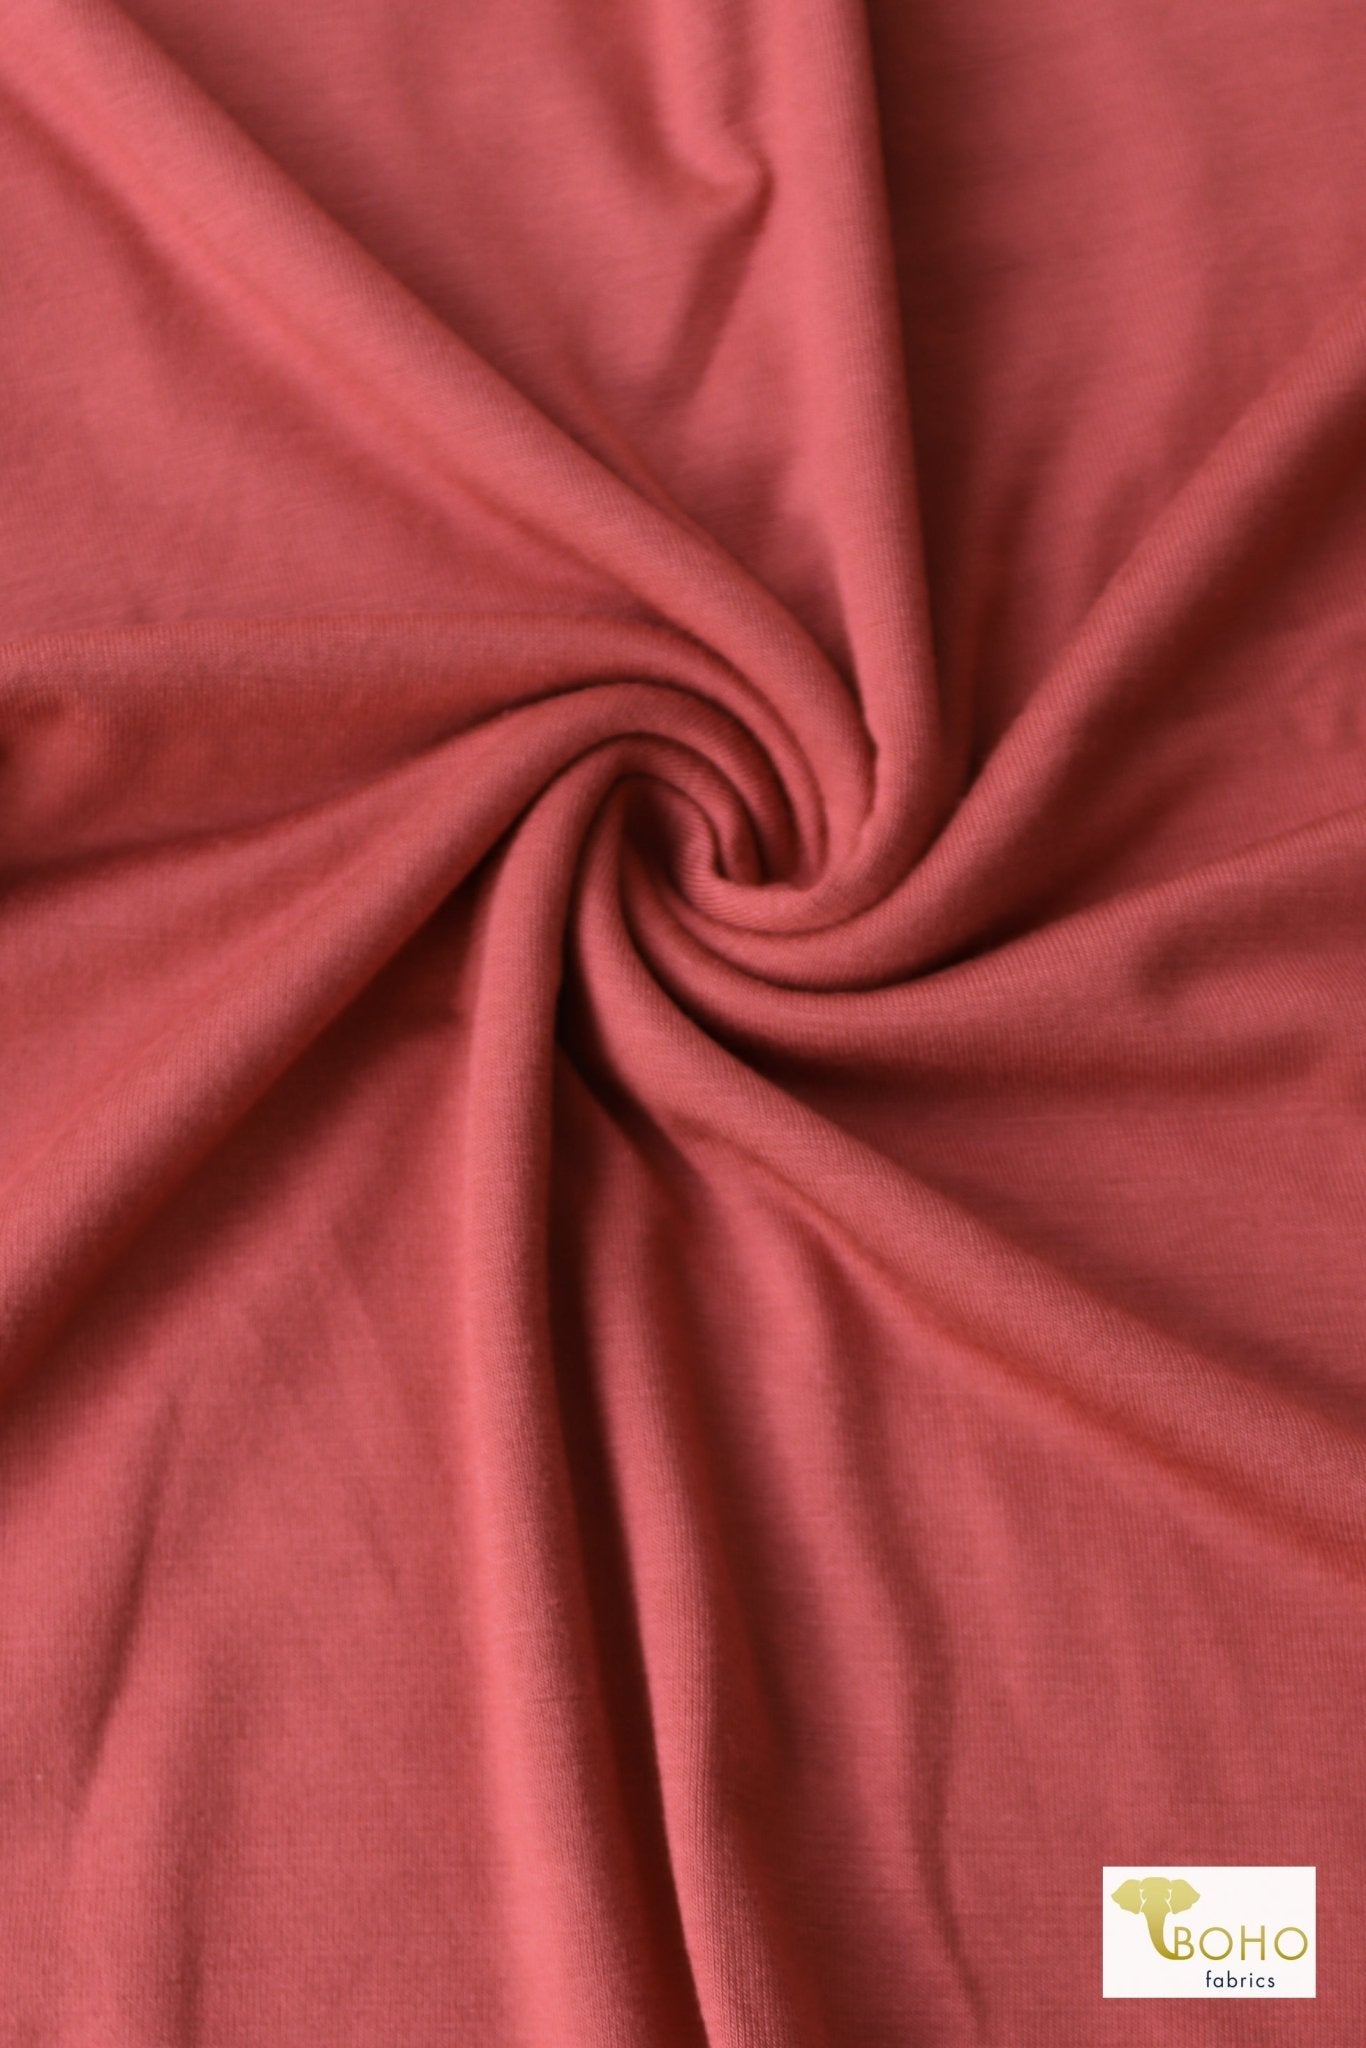 Light Cranberry Red, Rayon Spandex Solid - Boho Fabrics